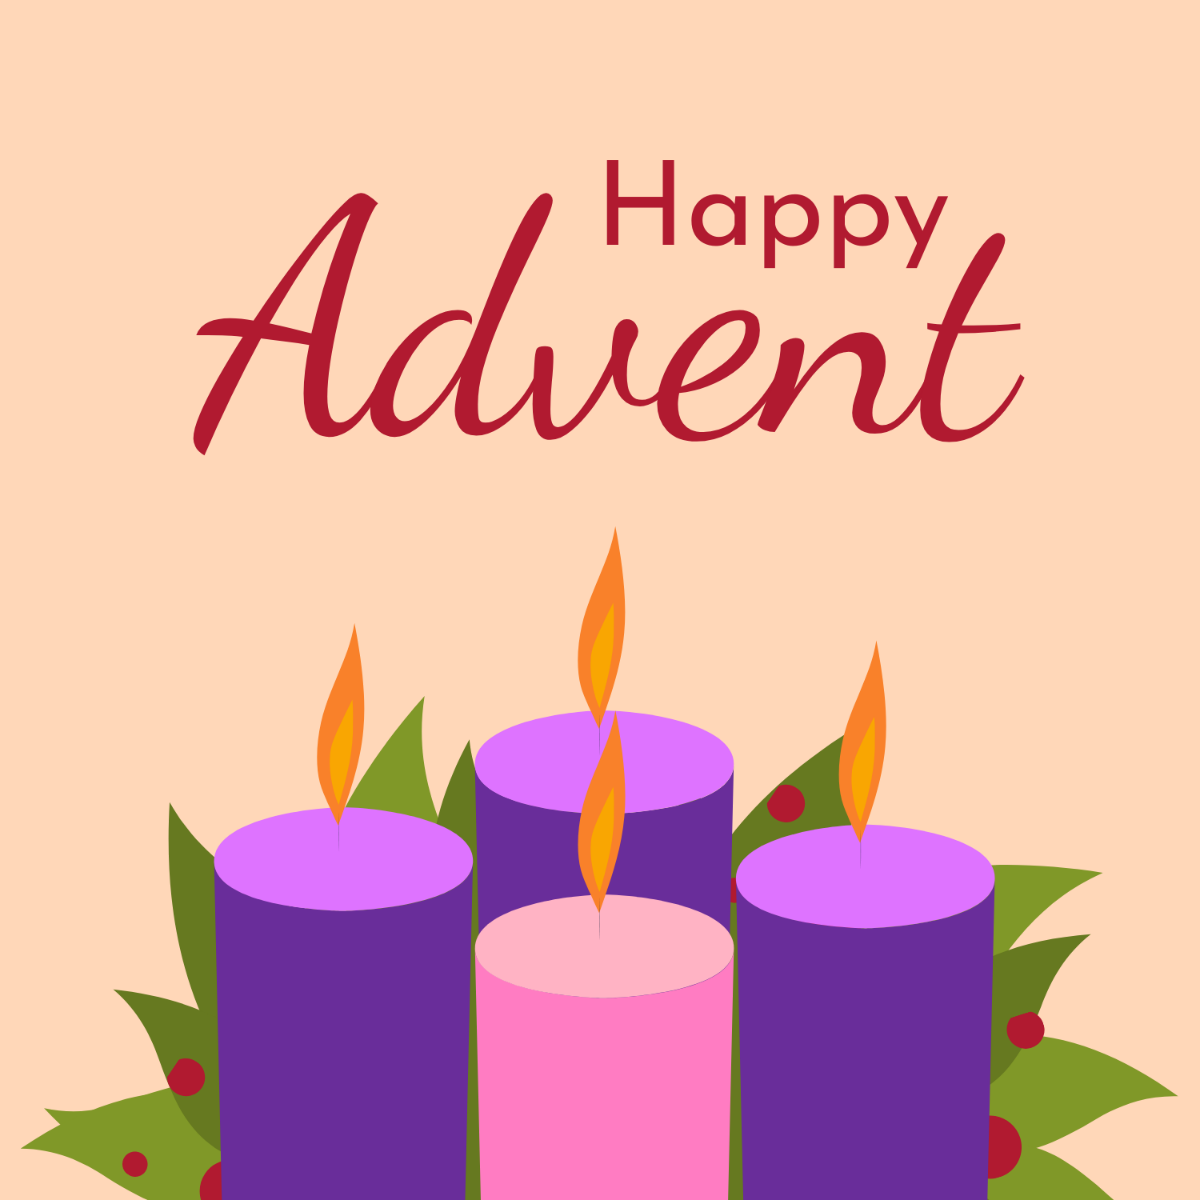 Free Happy Advent Illustration Template